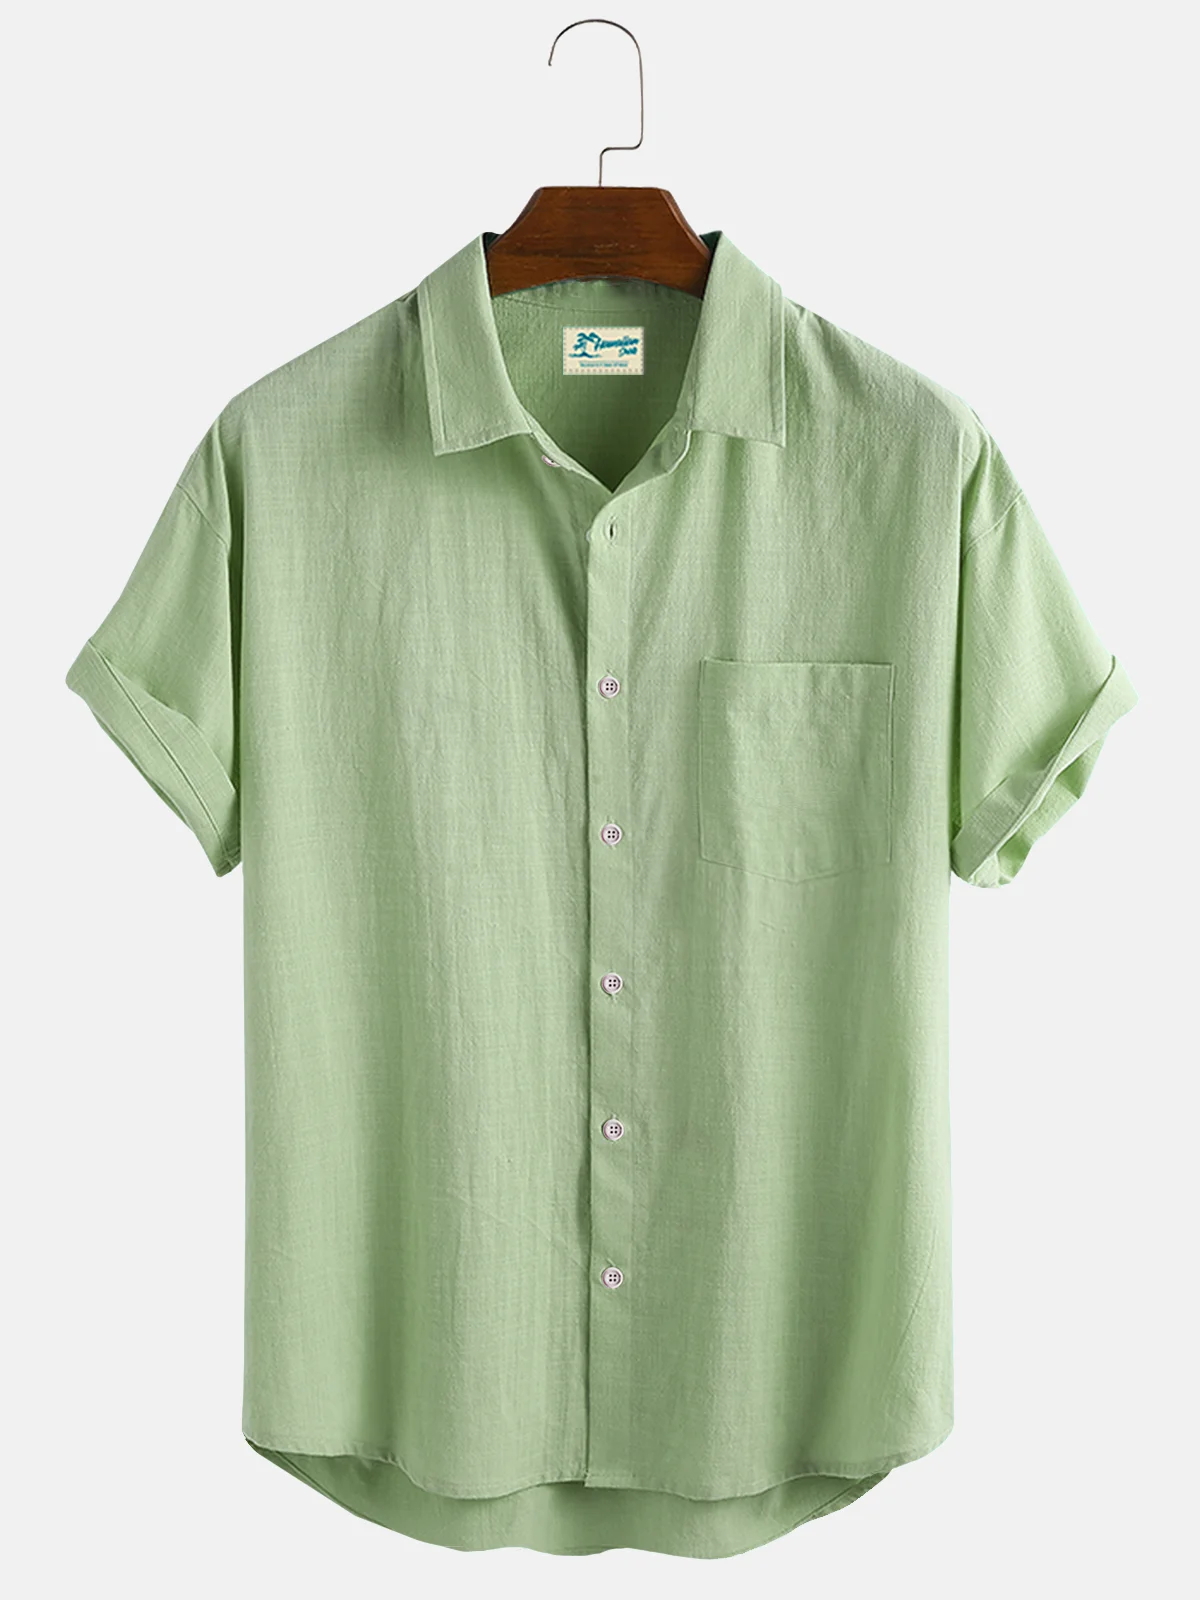 Royaura Beach Vacation Solid Color Men's Natural Fiber Blend Camp Shirts Big & Top Casual Button Down Shirts